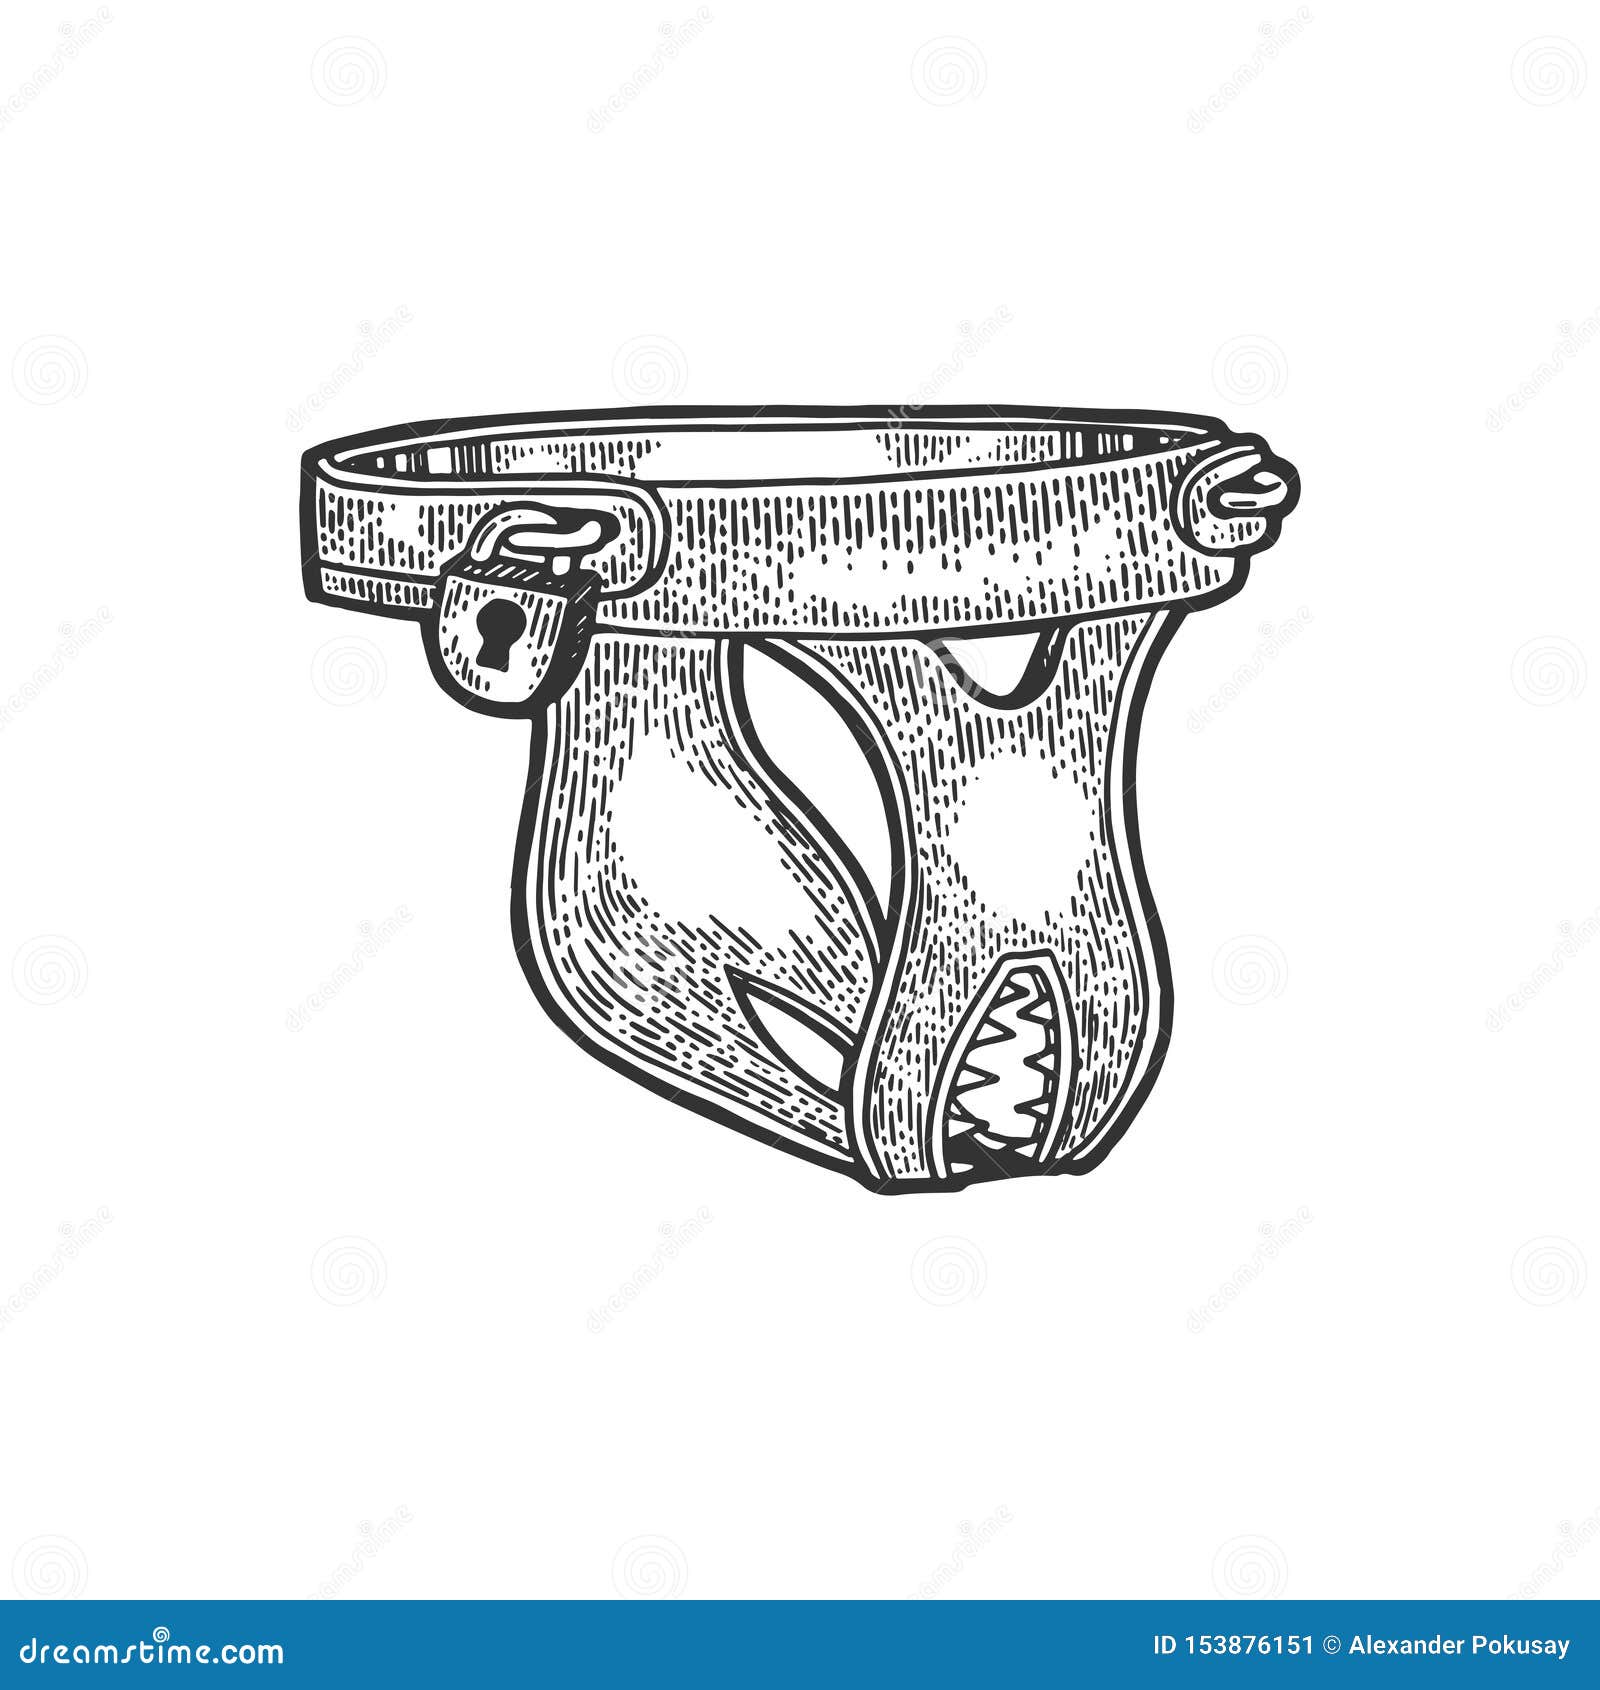 https://thumbs.dreamstime.com/z/chastity-belt-torture-device-sketch-vector-female-chastity-belt-medieval-torture-device-sketch-engraving-vector-illustration-153876151.jpg